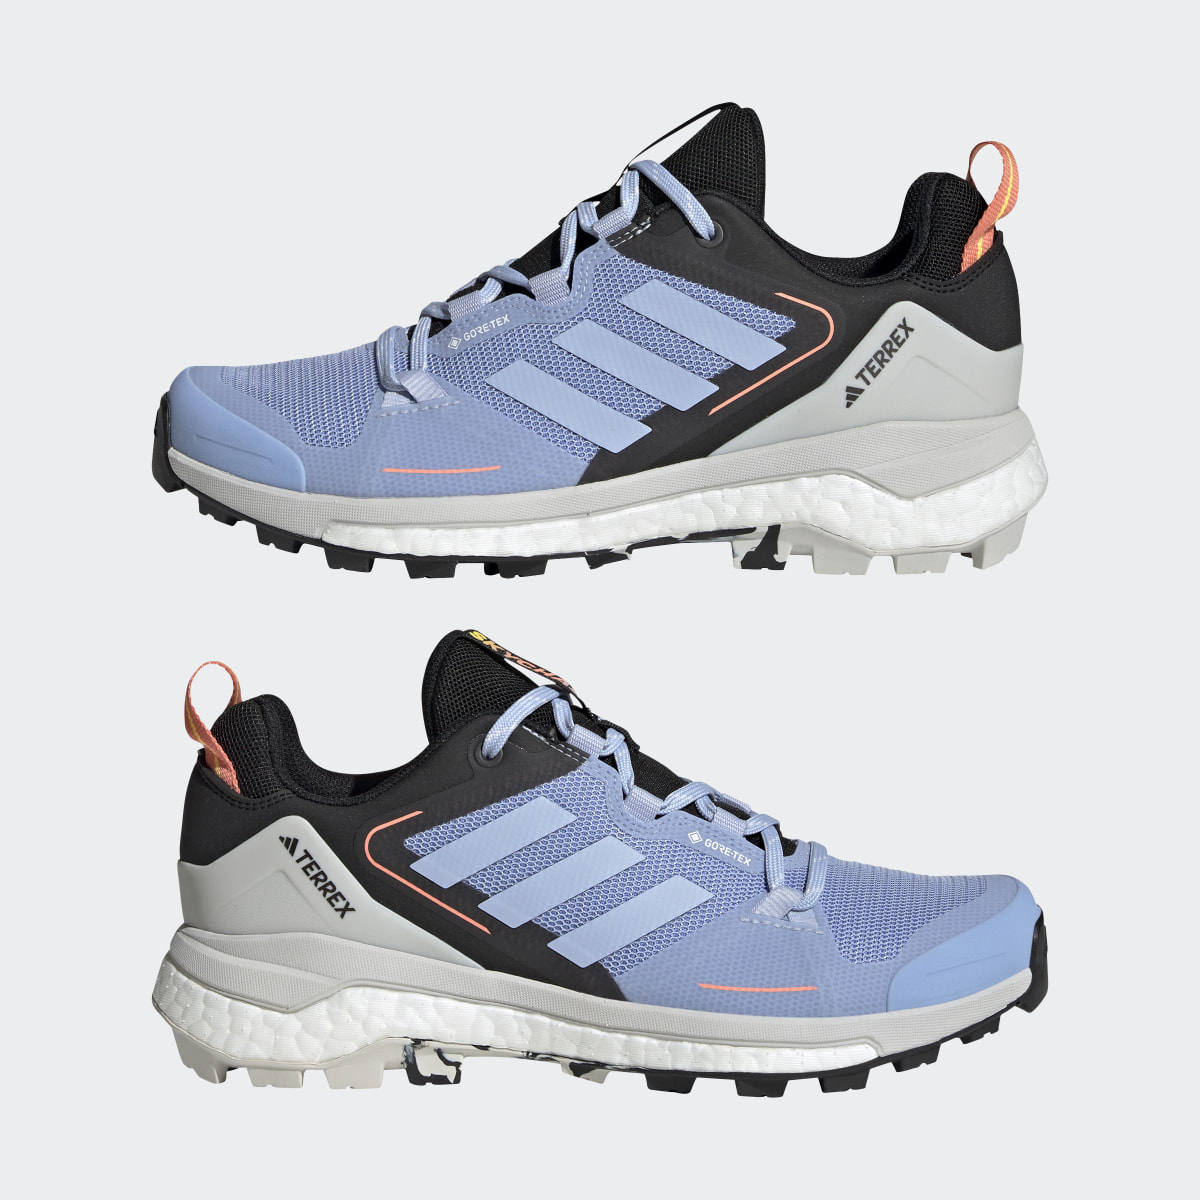 Adidas Sapatilhas de Caminhada GORE-TEX Skychaser 2.0 TERREX. 8